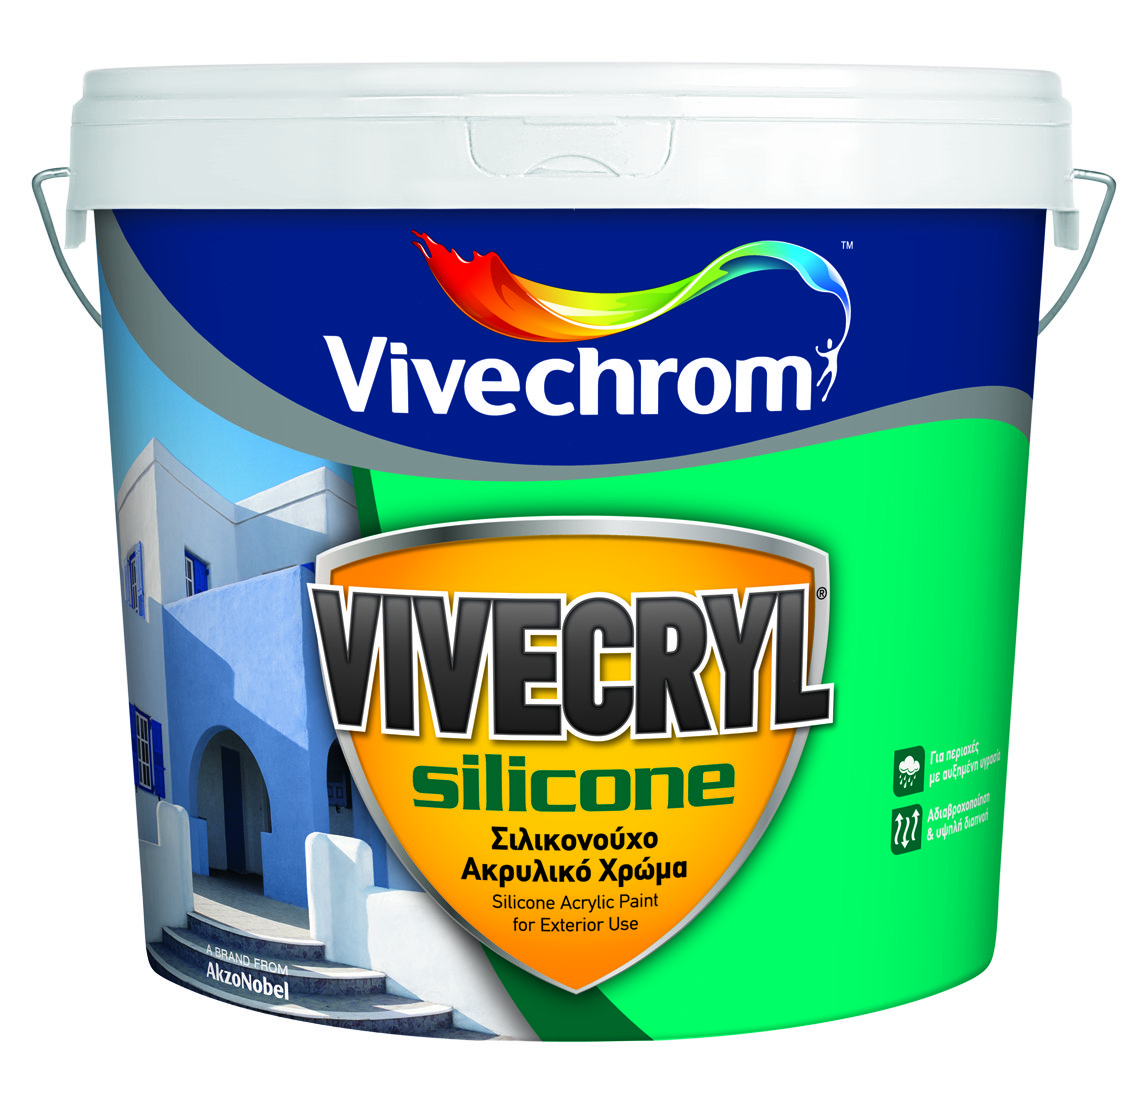 Vivechrom Vivecryl Silicone Οικολογικό Ακρυλική Βάση Matt Finish D 10L